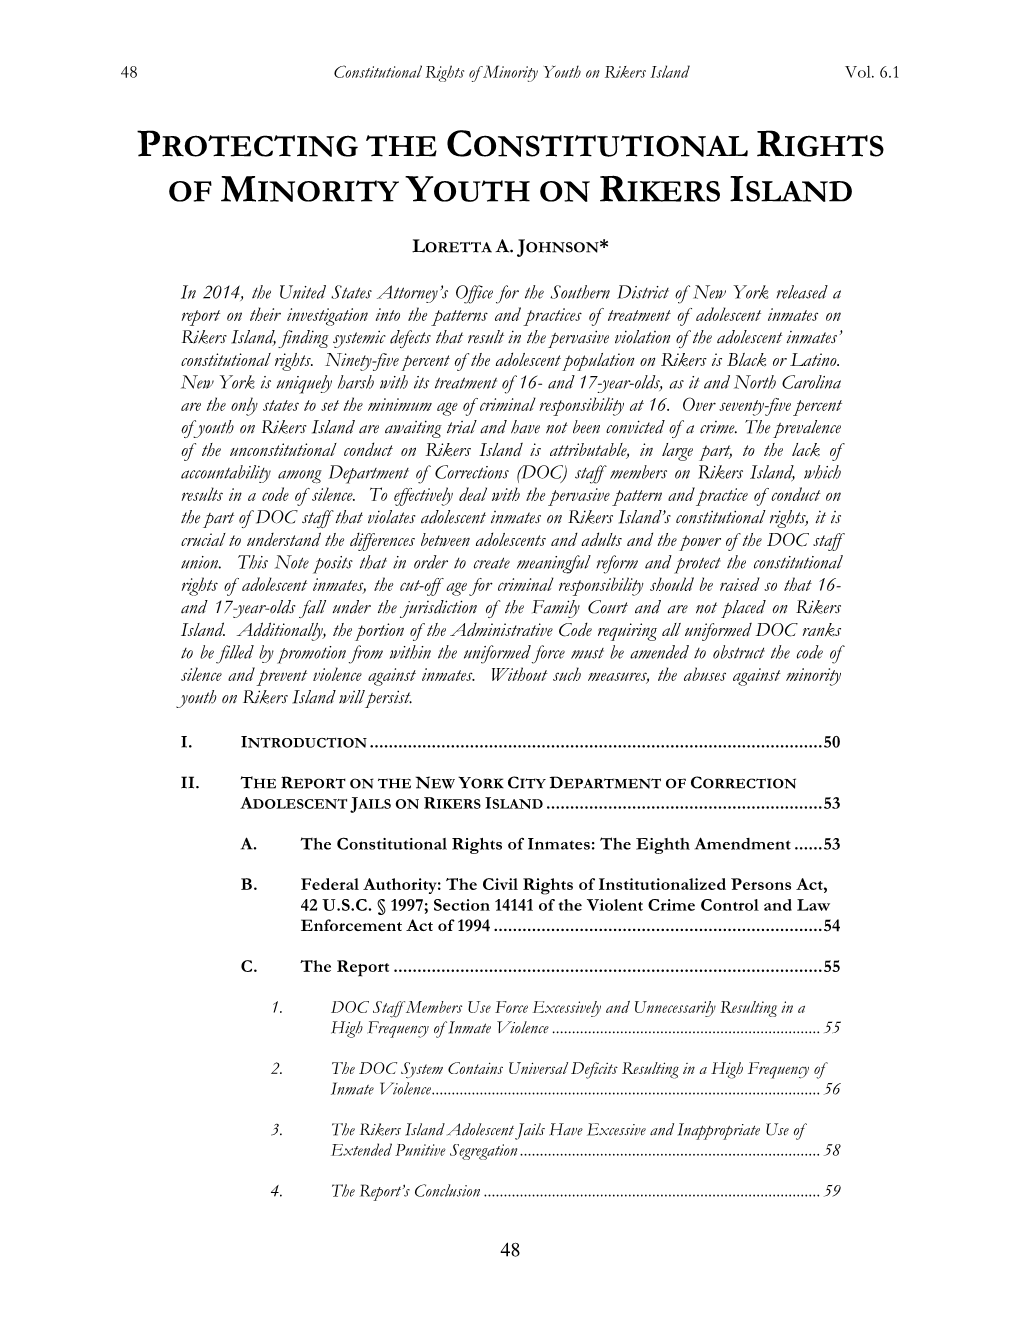 Of Minority Youth on Rikers Island Vol